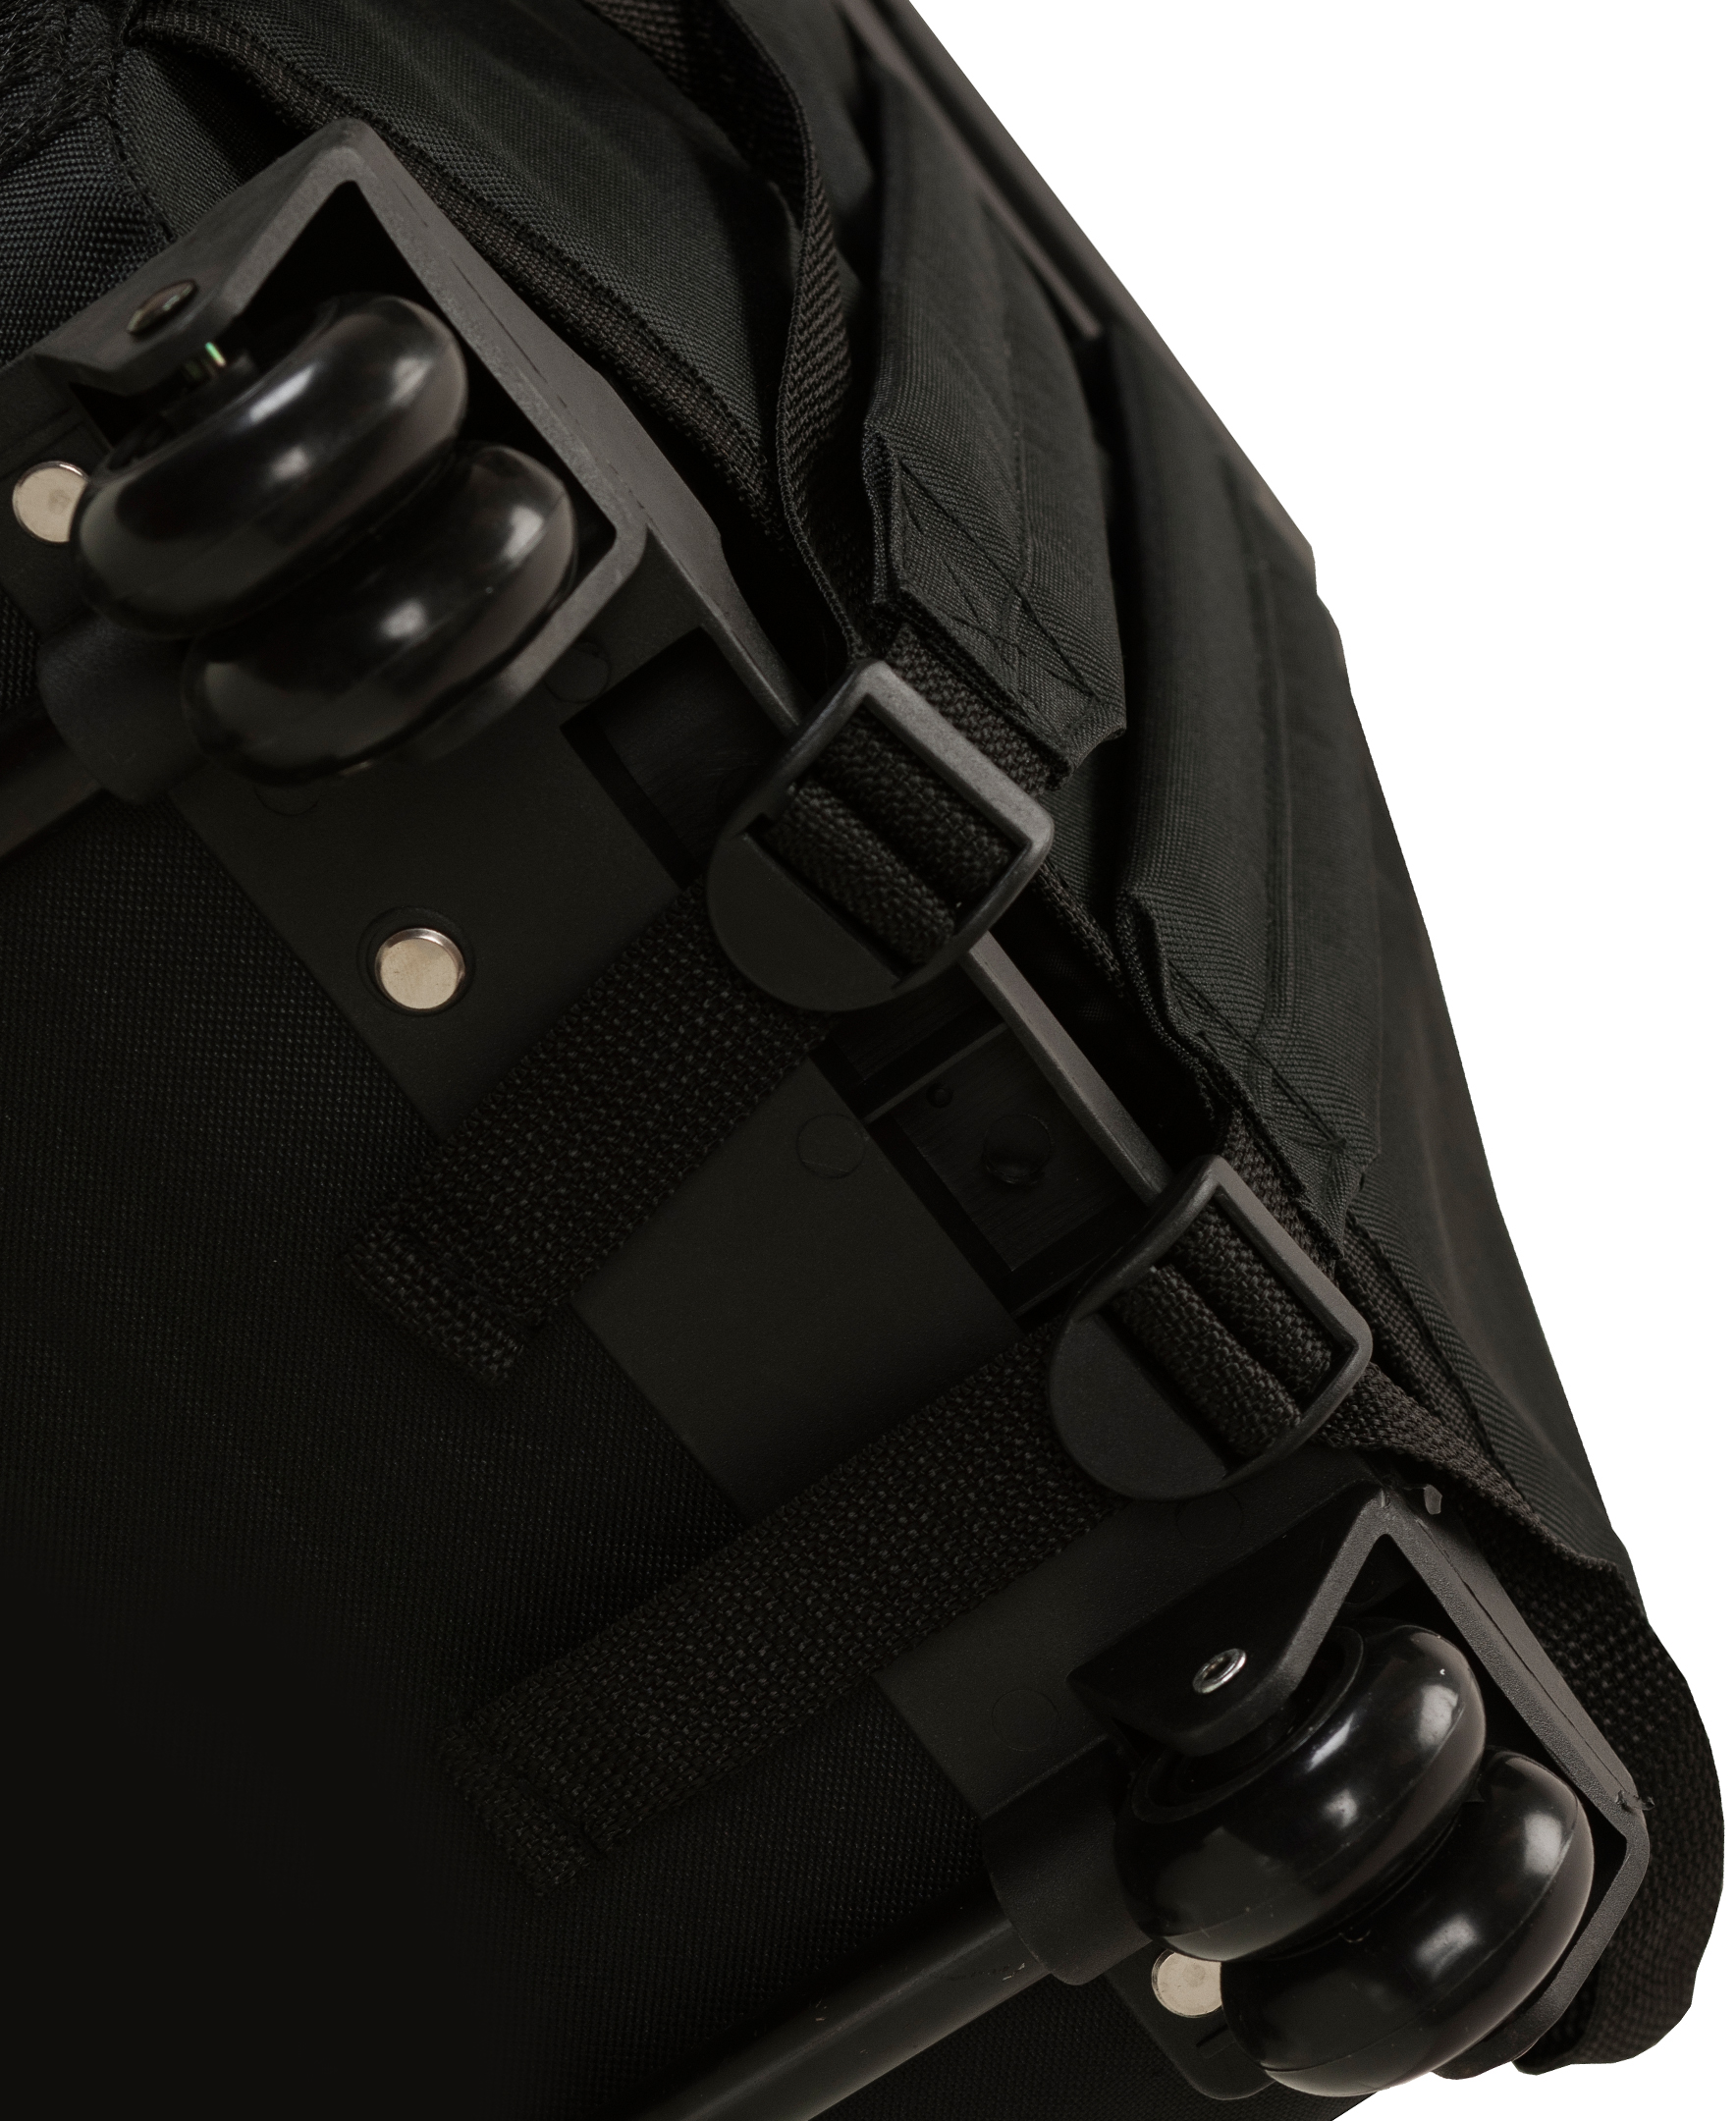 Rockland Unisex Luggage 17" Rolling Backpack R01 Black - image 4 of 4